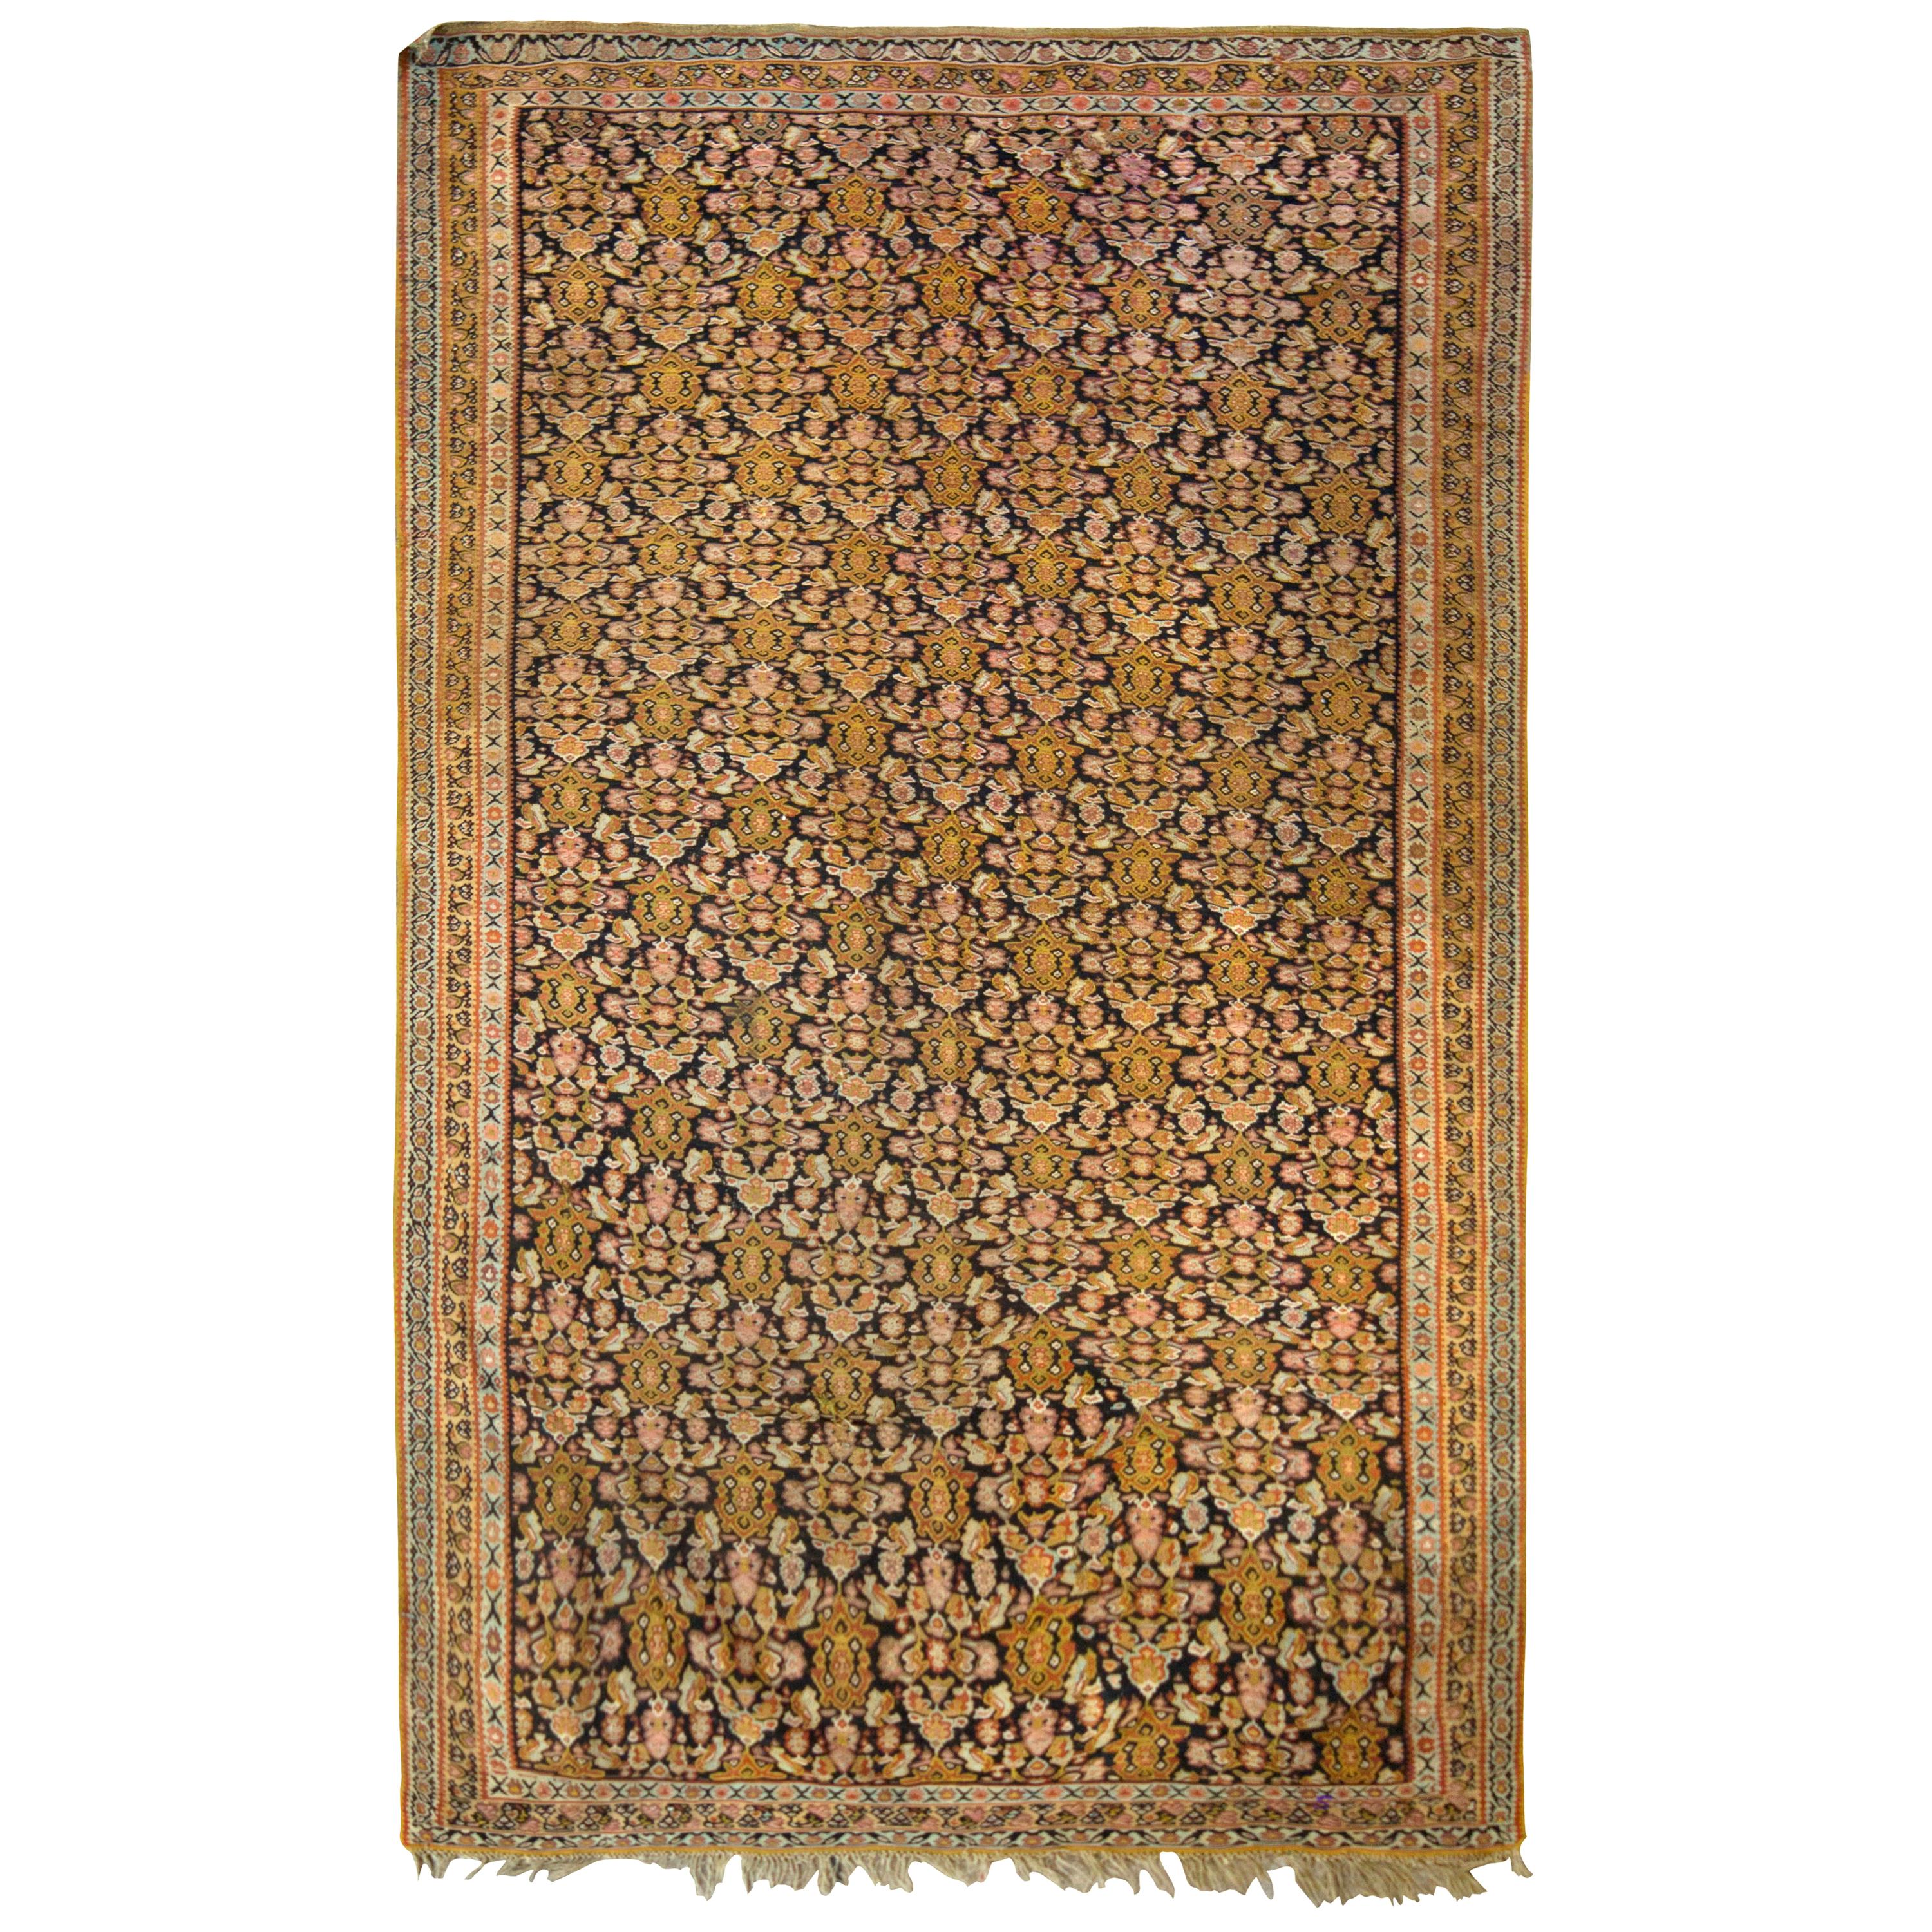 Antique Senneh Kilim Beige Brown Gold Geometric All-over Pattern